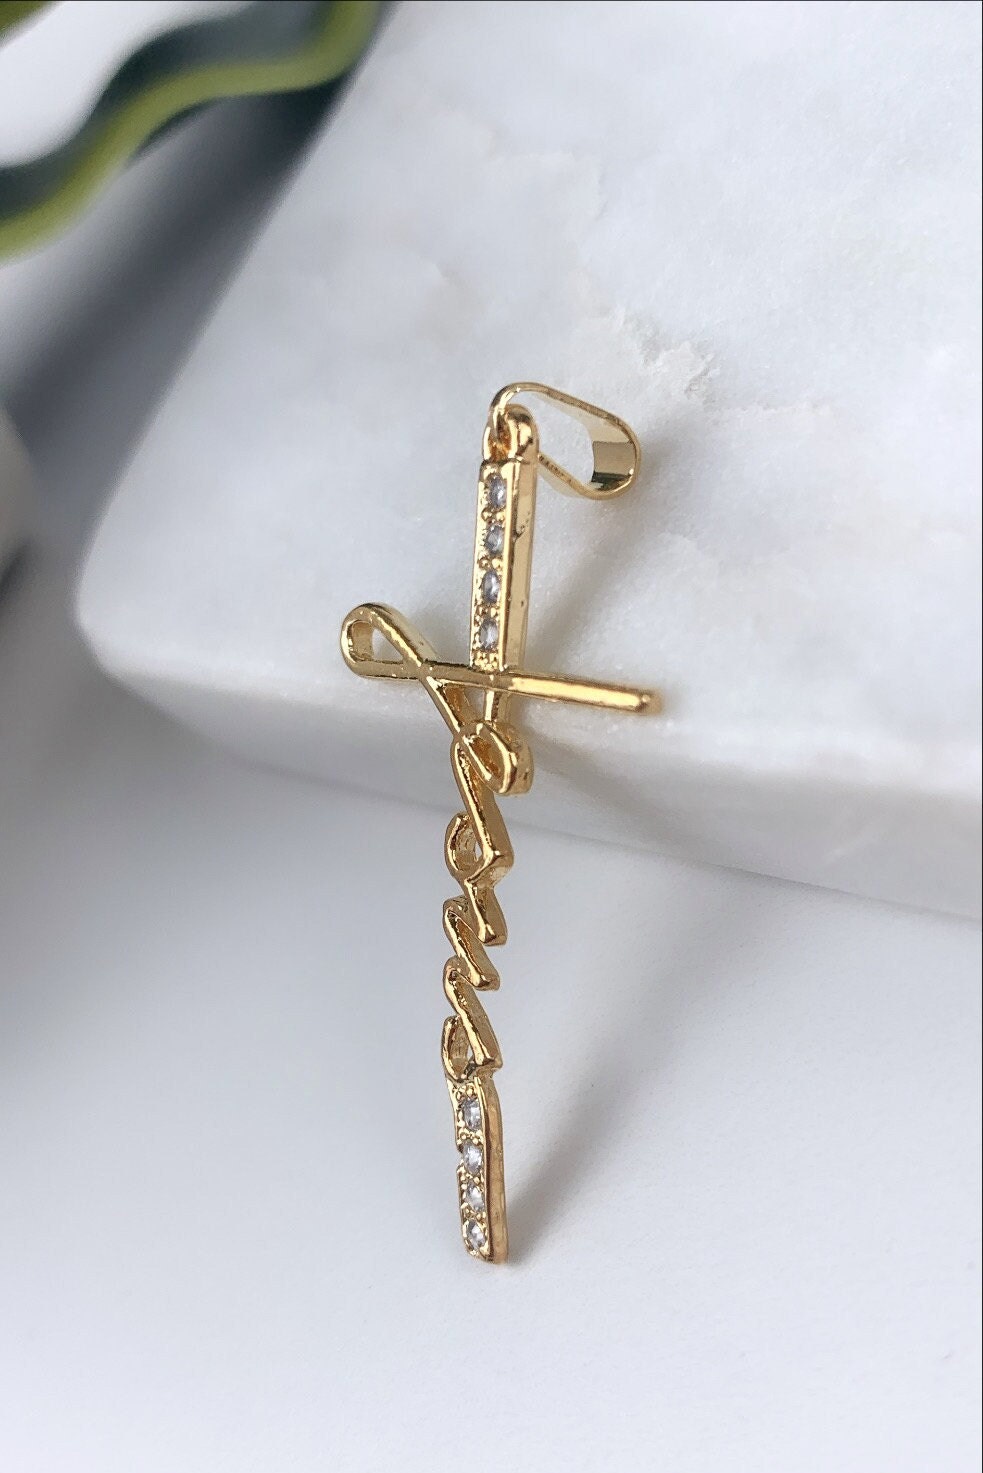 18k Gold Filled,Cubic Zirconia, Description Jesus Cross, Charm Pendant, Curve Snake Chain, Wholesale Jewelry Making Supplies